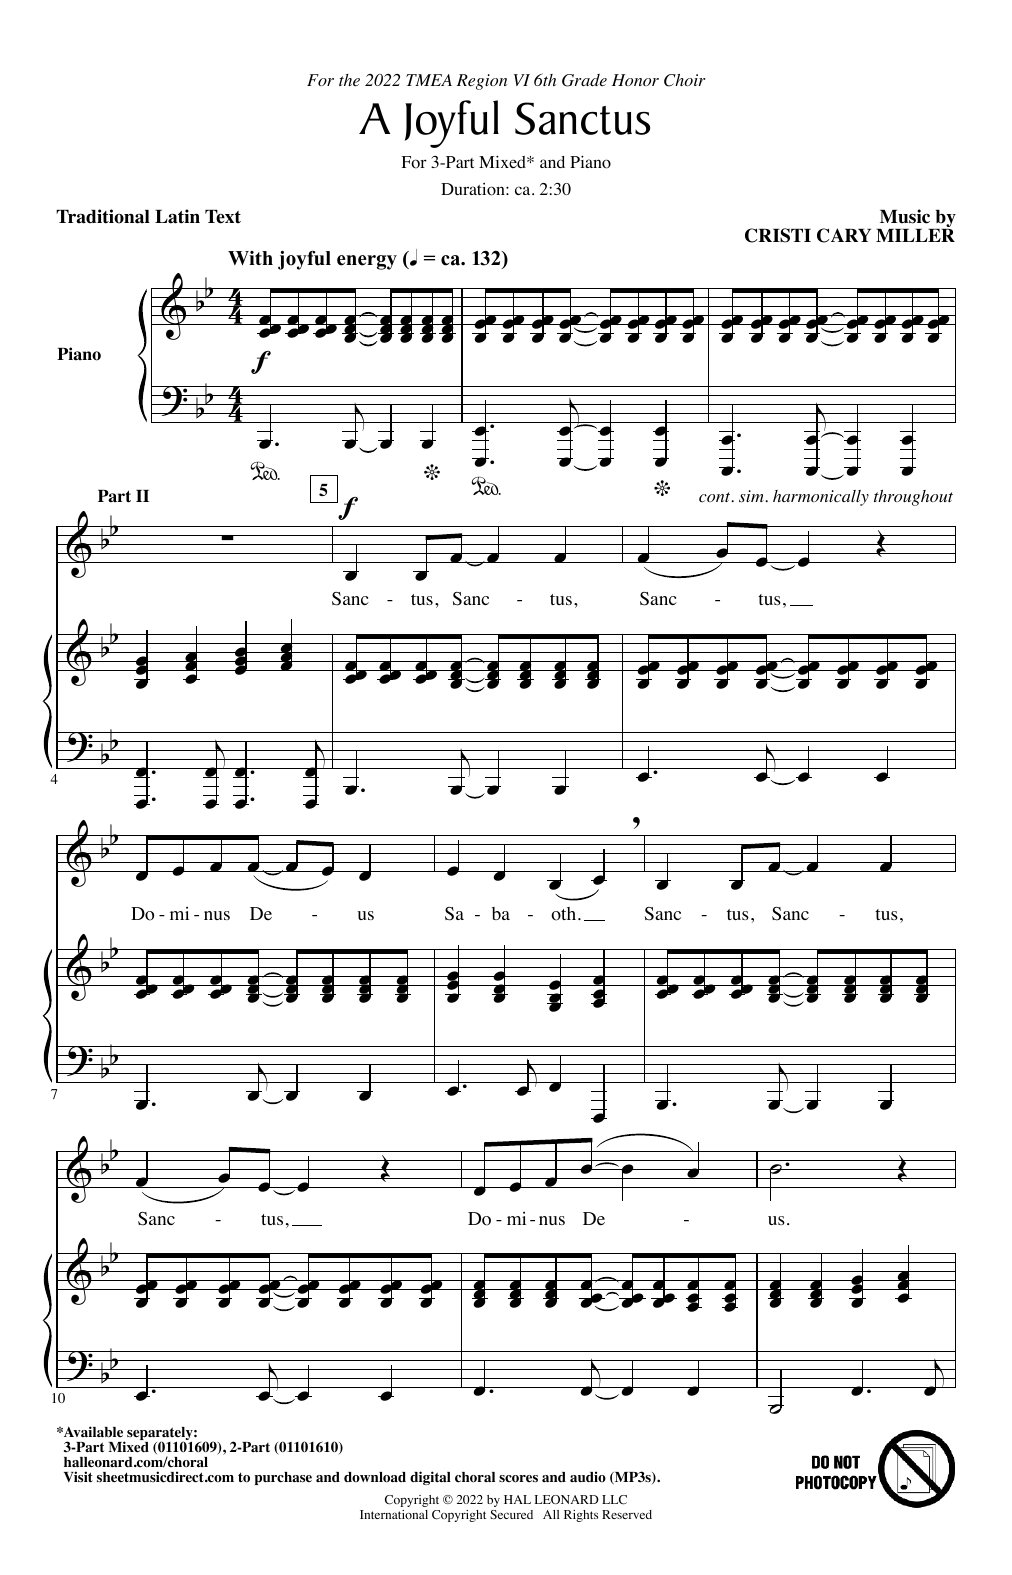 Cristi Cary Miller A Joyful Sanctus Sheet Music Notes & Chords for 2-Part Choir - Download or Print PDF